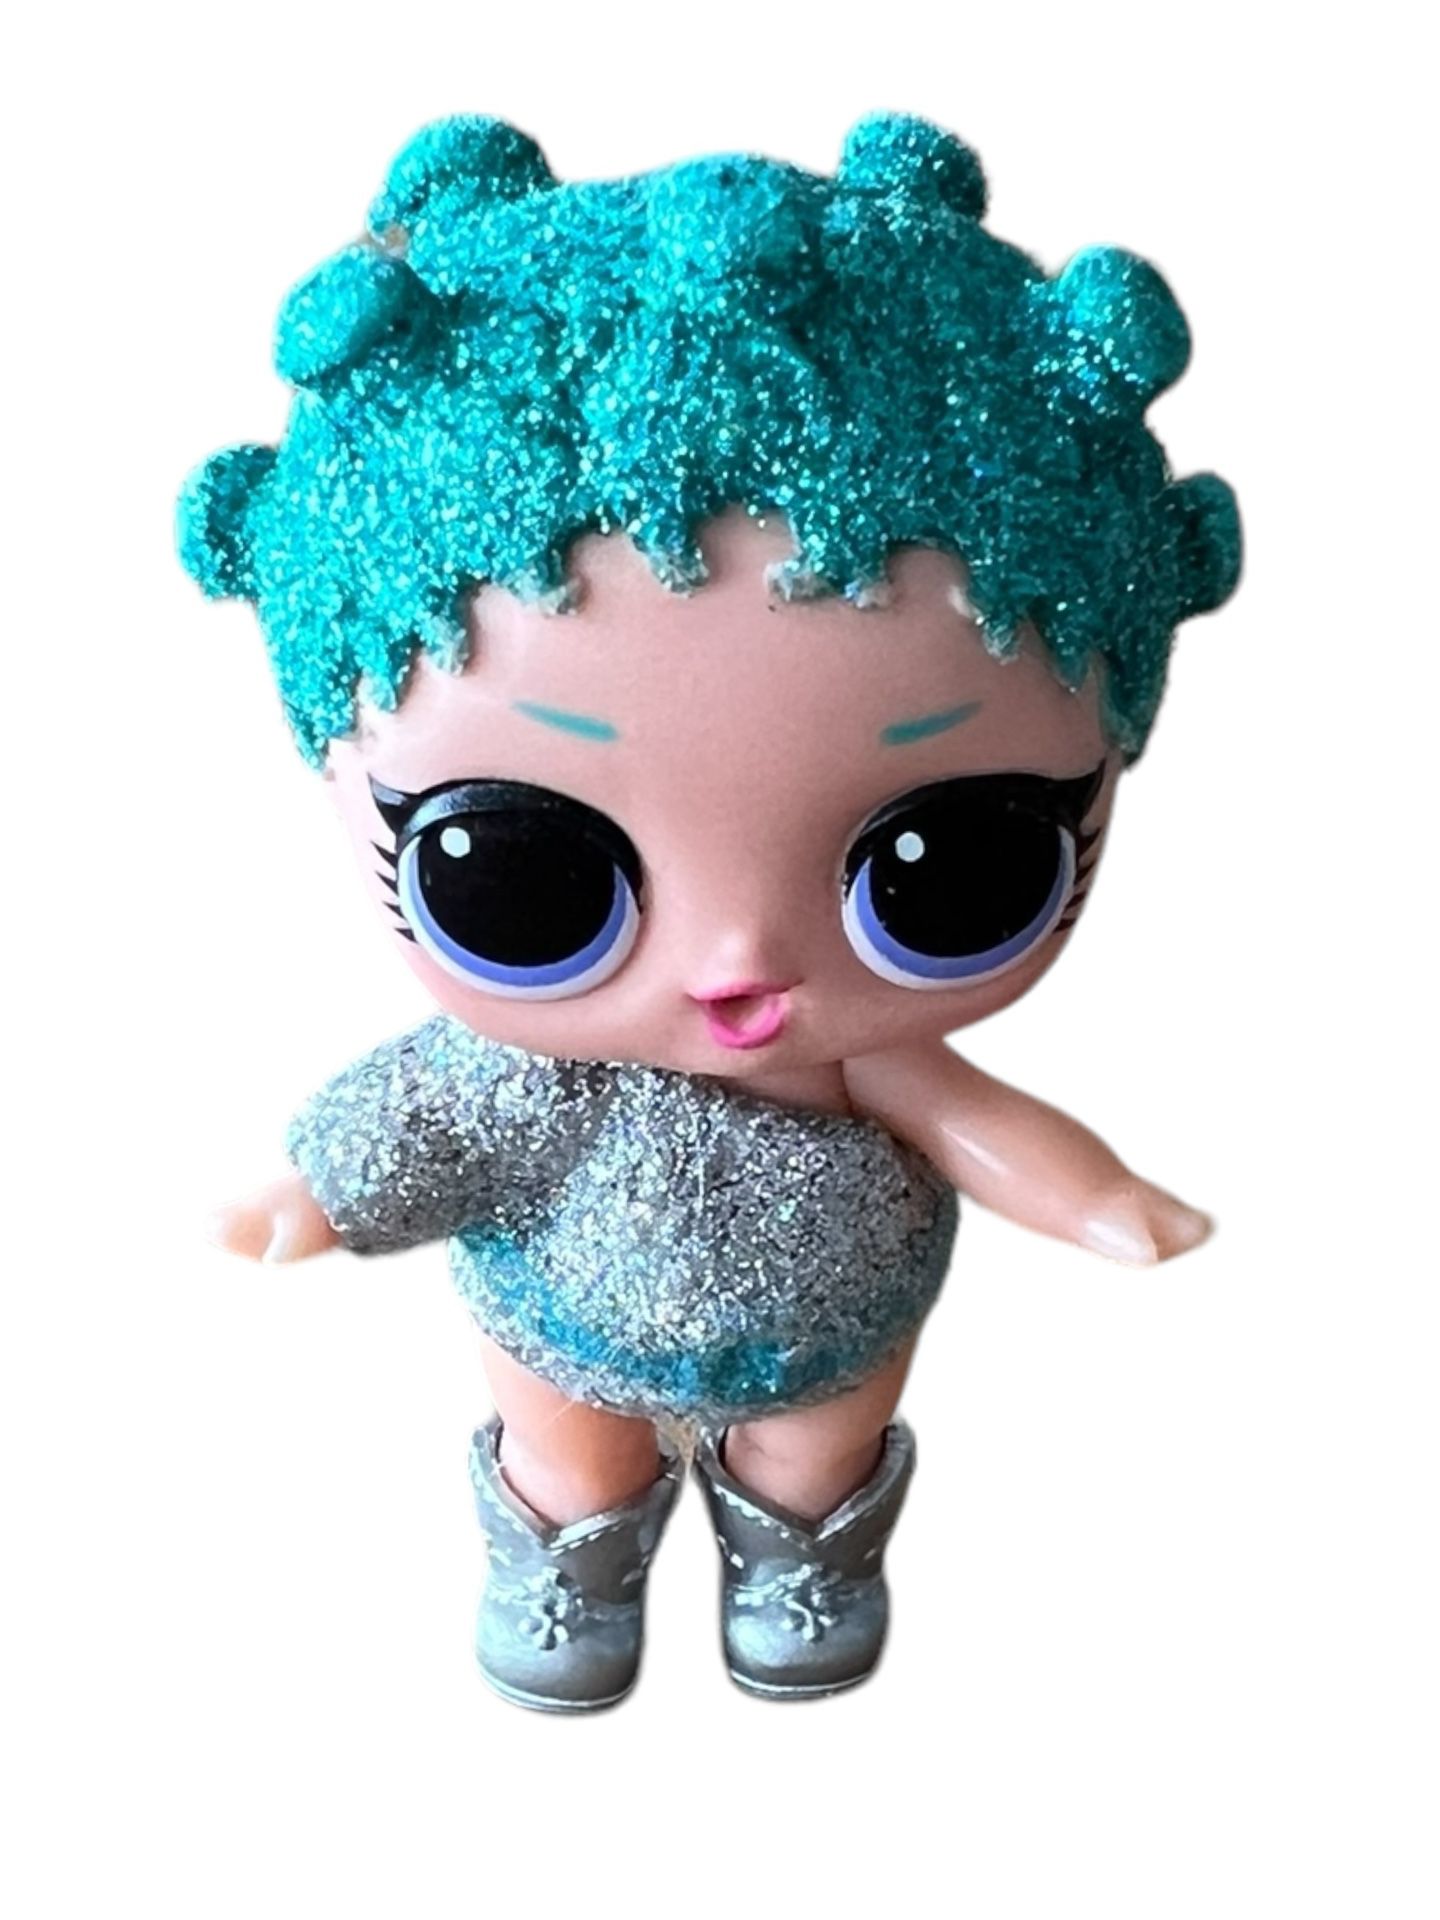 MGA LOL Surprise Mini Doll Blue Glittery Shiny Hair Black Eyes Silver Boots  This MGA LOL Surprise Mini Doll features blue glittery shiny hair, black 